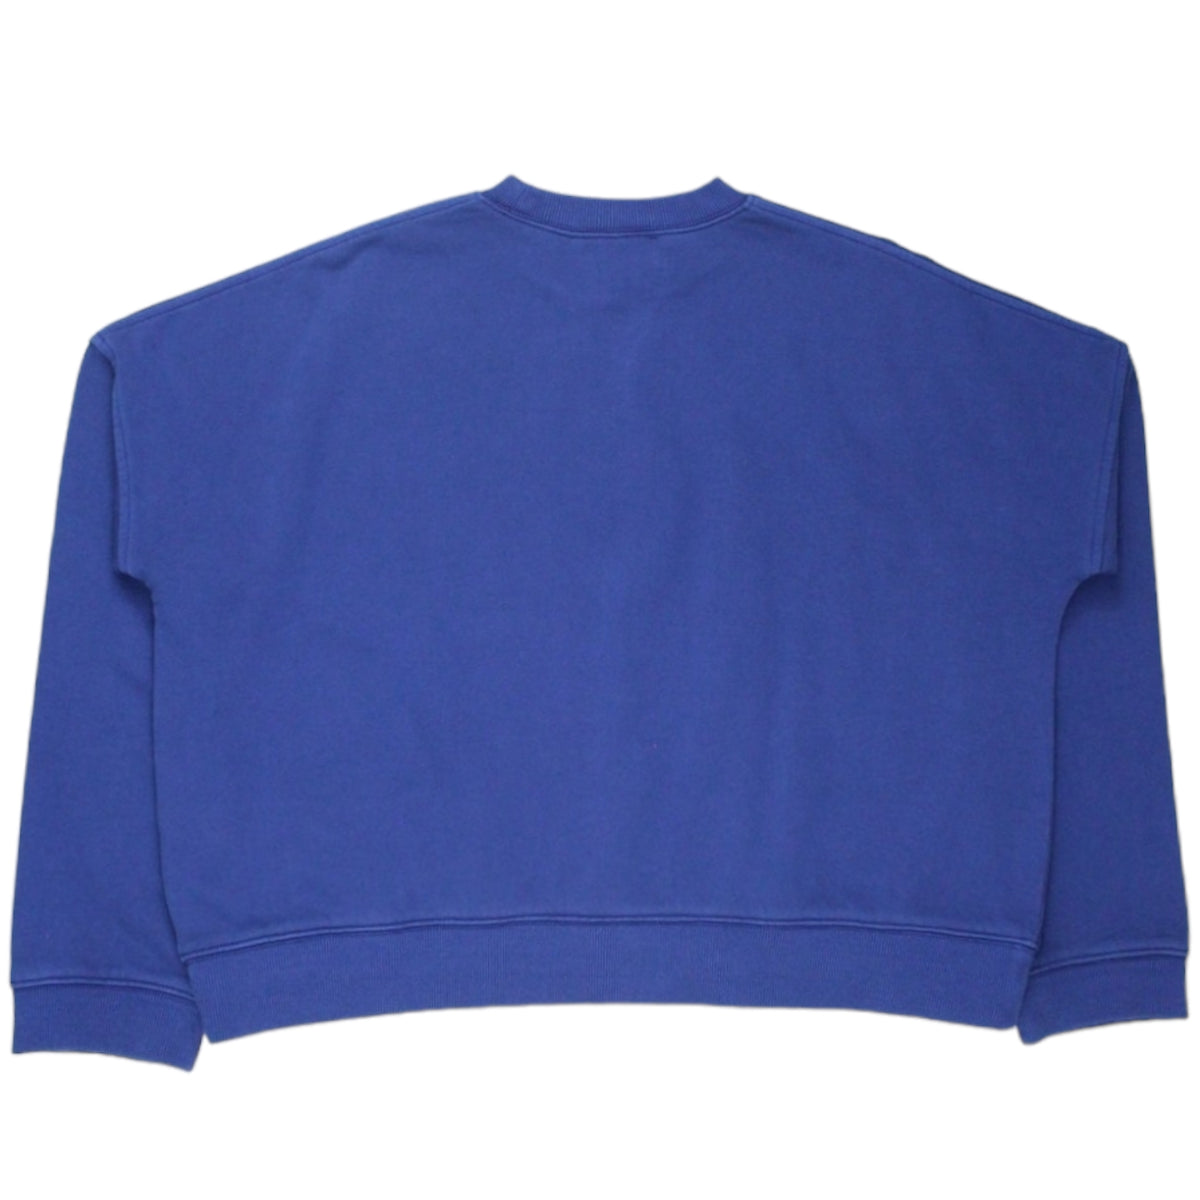 YMC Bellwether Blue Sweatshirt